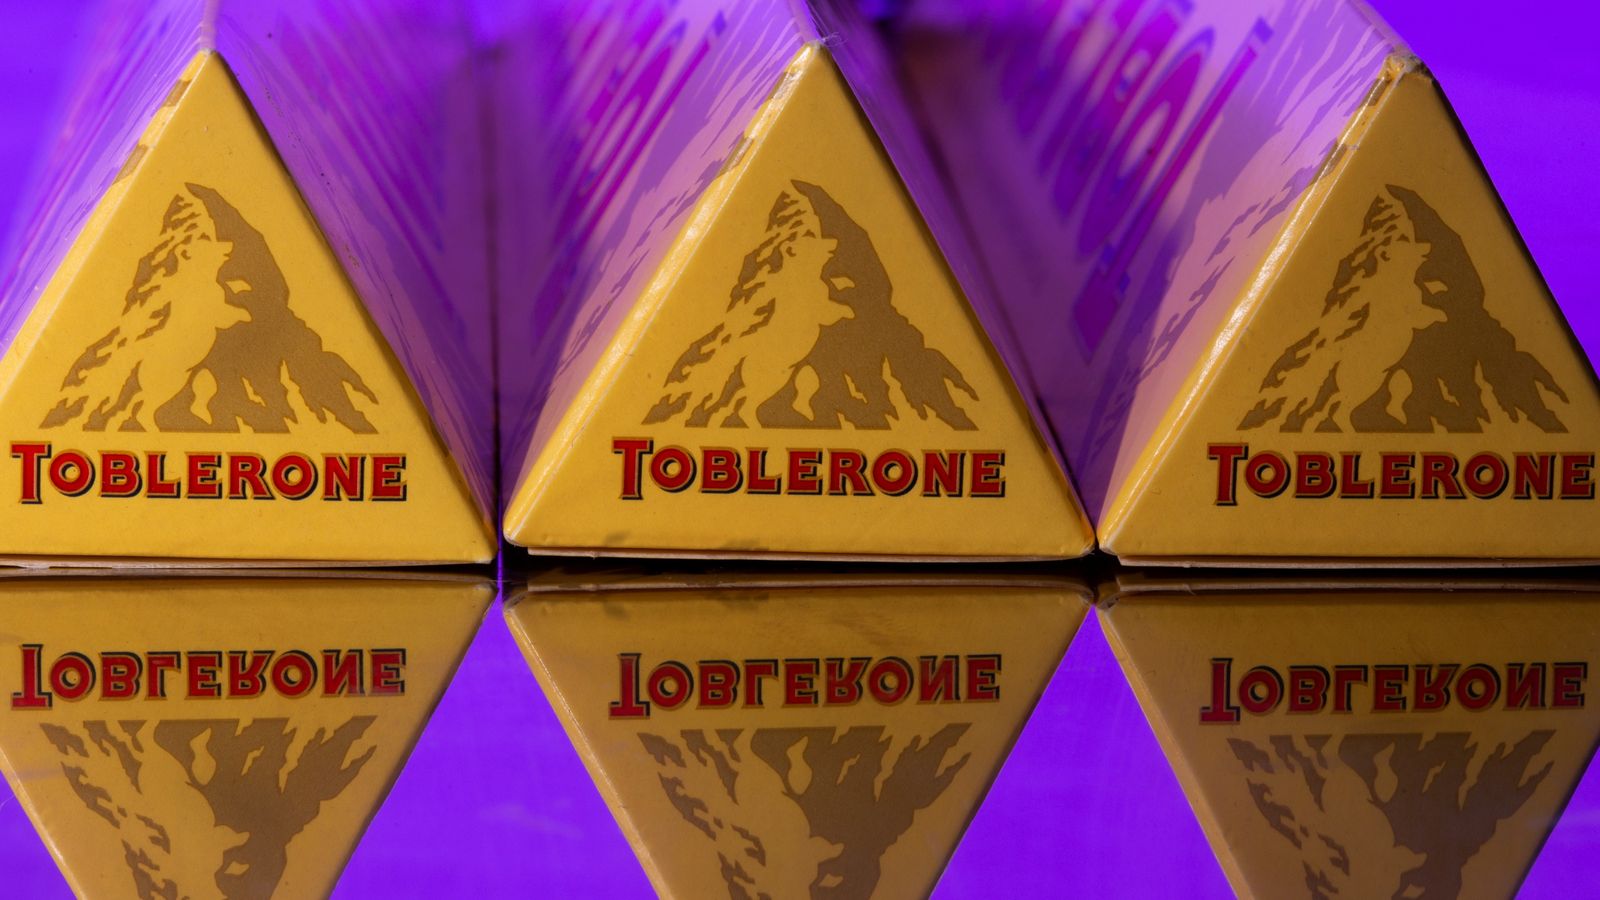 Toblerone to drop Matterhorn logo from packaging as it's no longer made in Switzerland